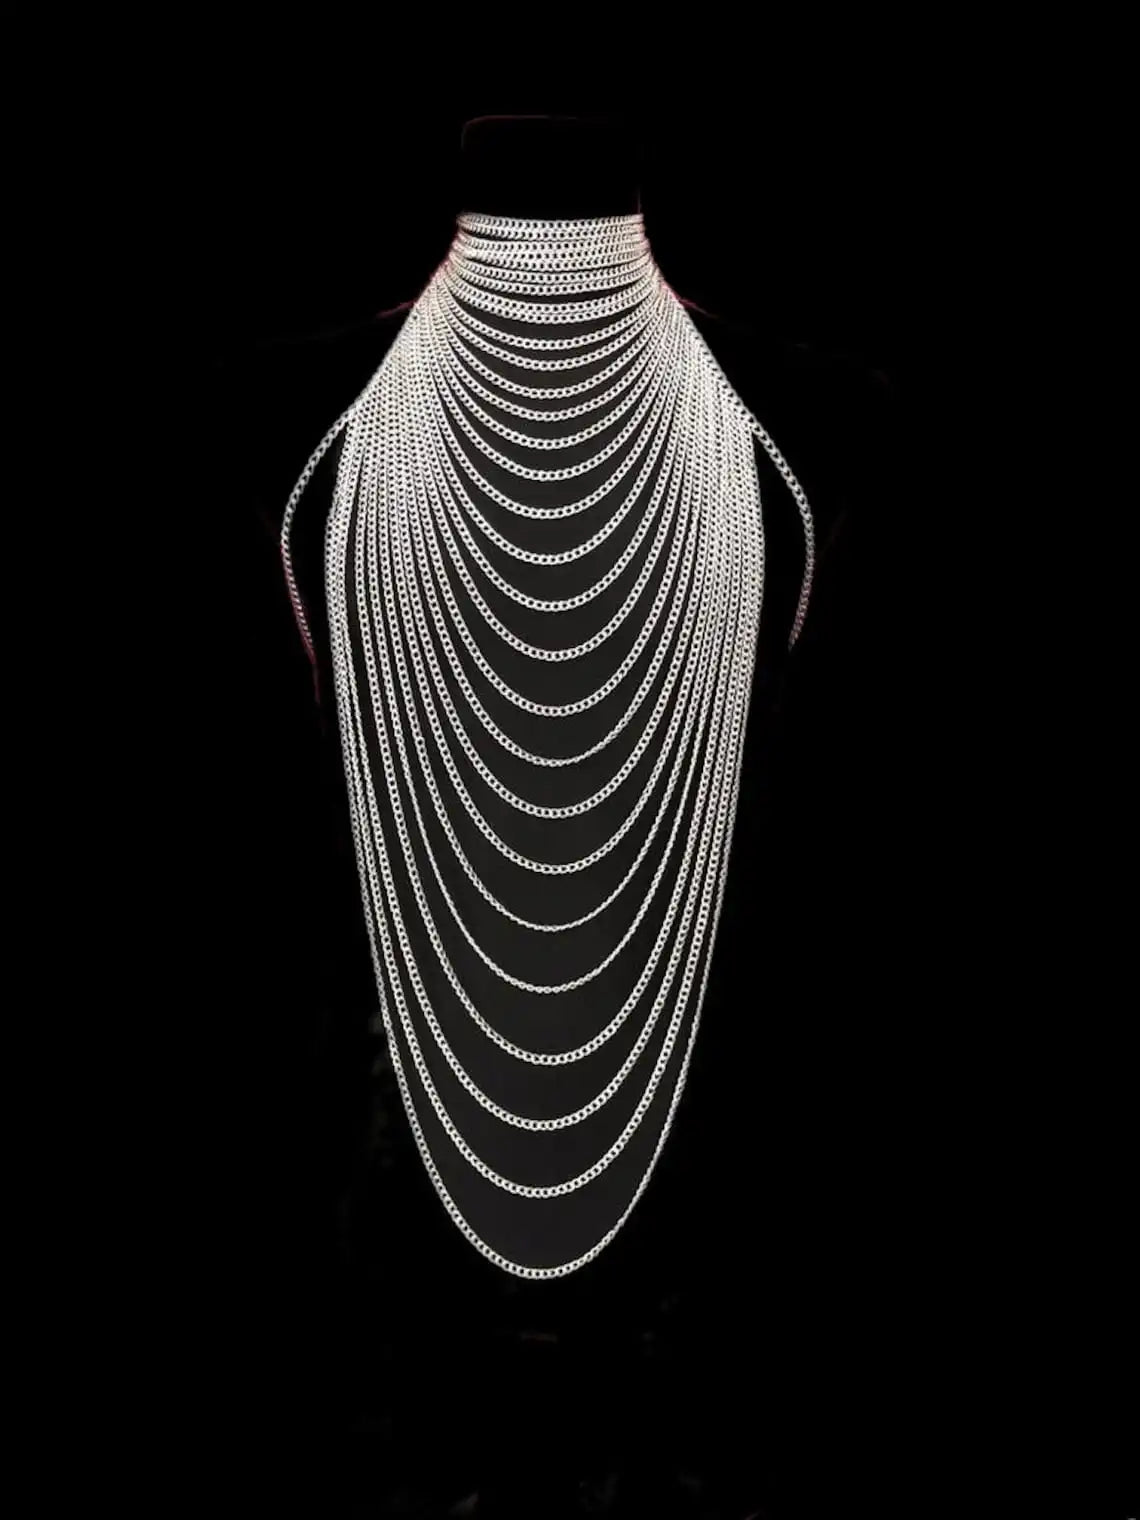 Multi-Layered Chain Necklace |  Body Harness Chain Accessories  | 3 Colors Gold Silver Gray